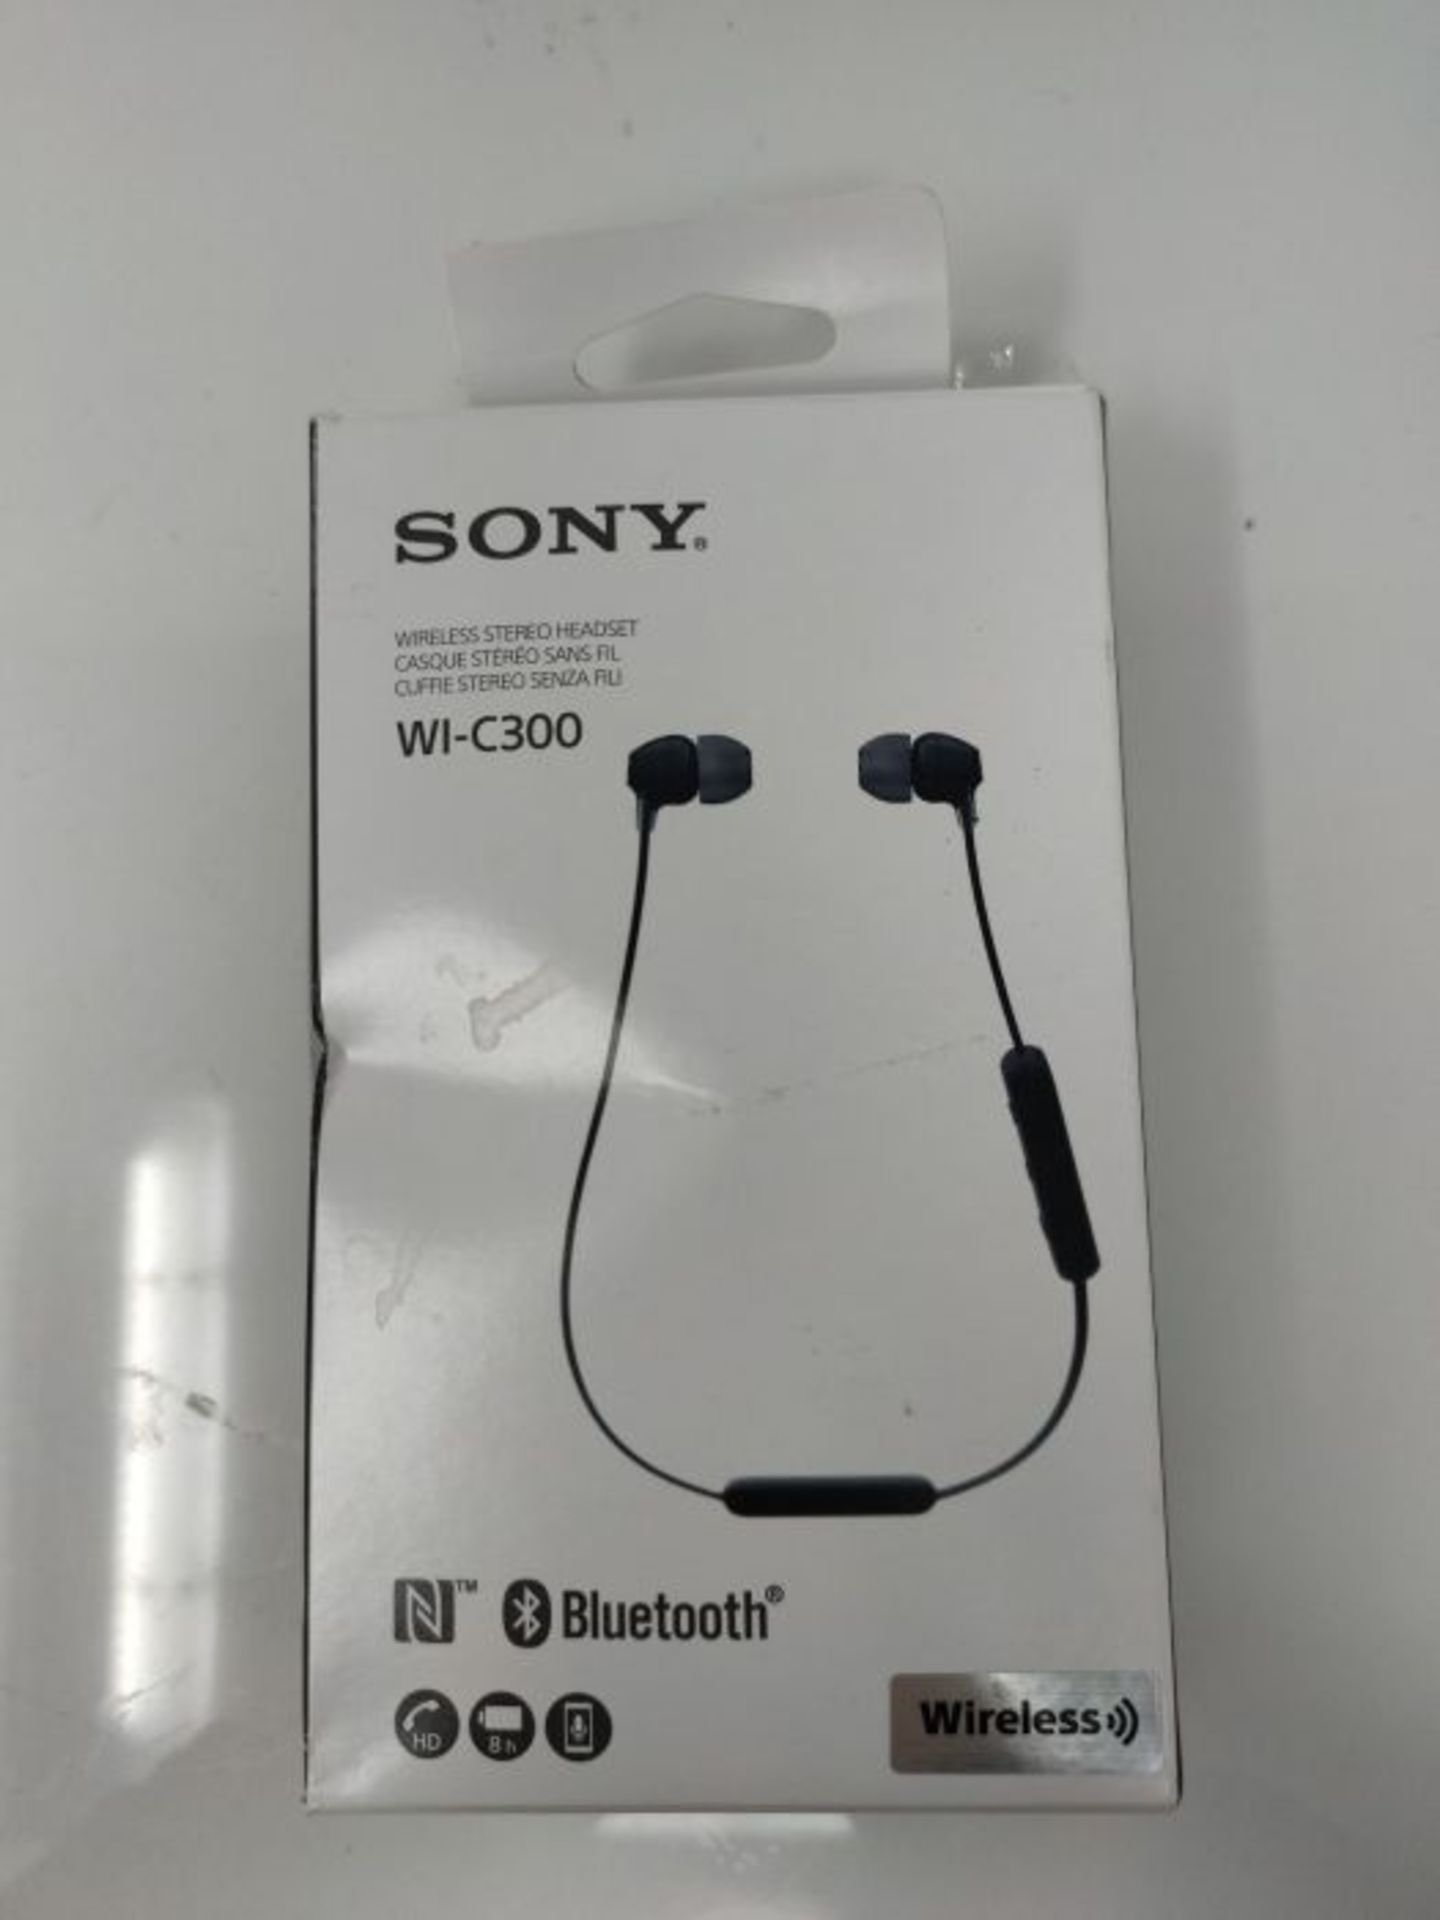 Sony WI-C300 Intrauricolare senza Fili, Bluetooth, Nero - Image 5 of 6